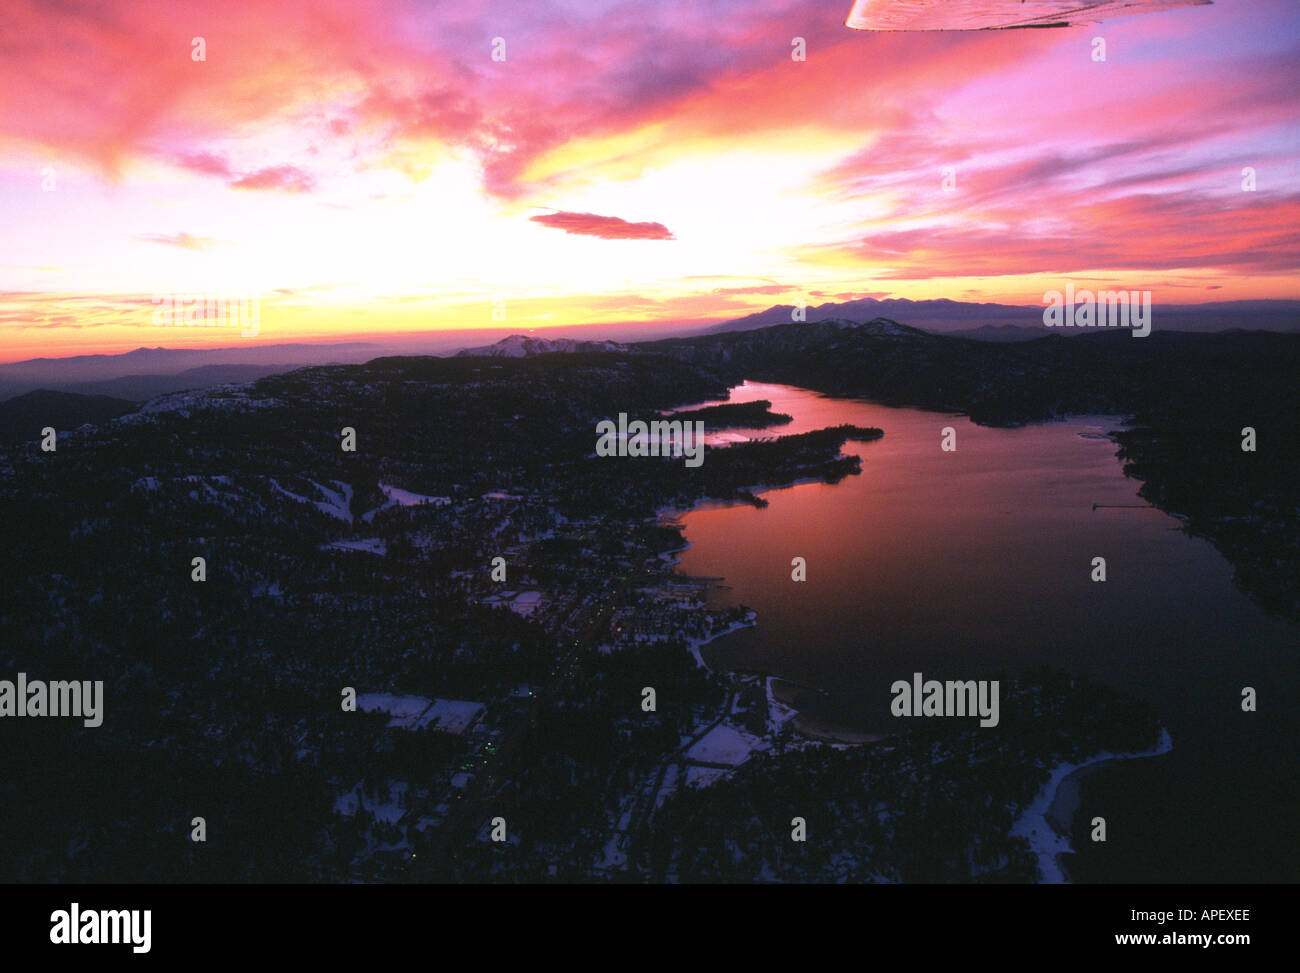 Big bear ski resort, lake at sunset, California, USA Stock Photo